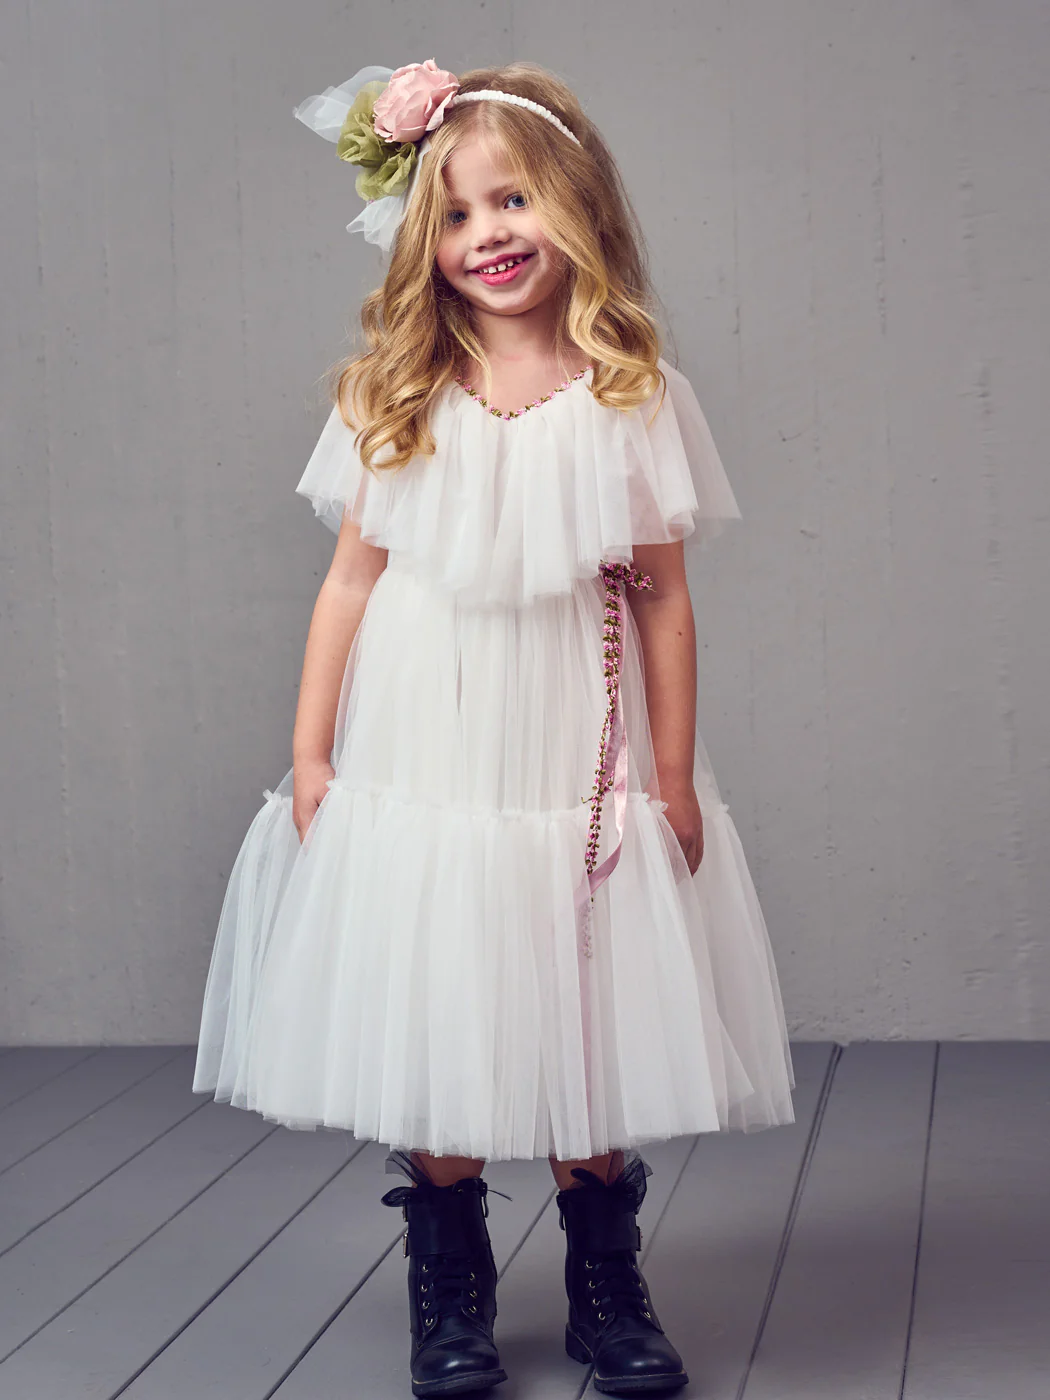 designerscat-anuse-white-dress-girl-6_1050x1400